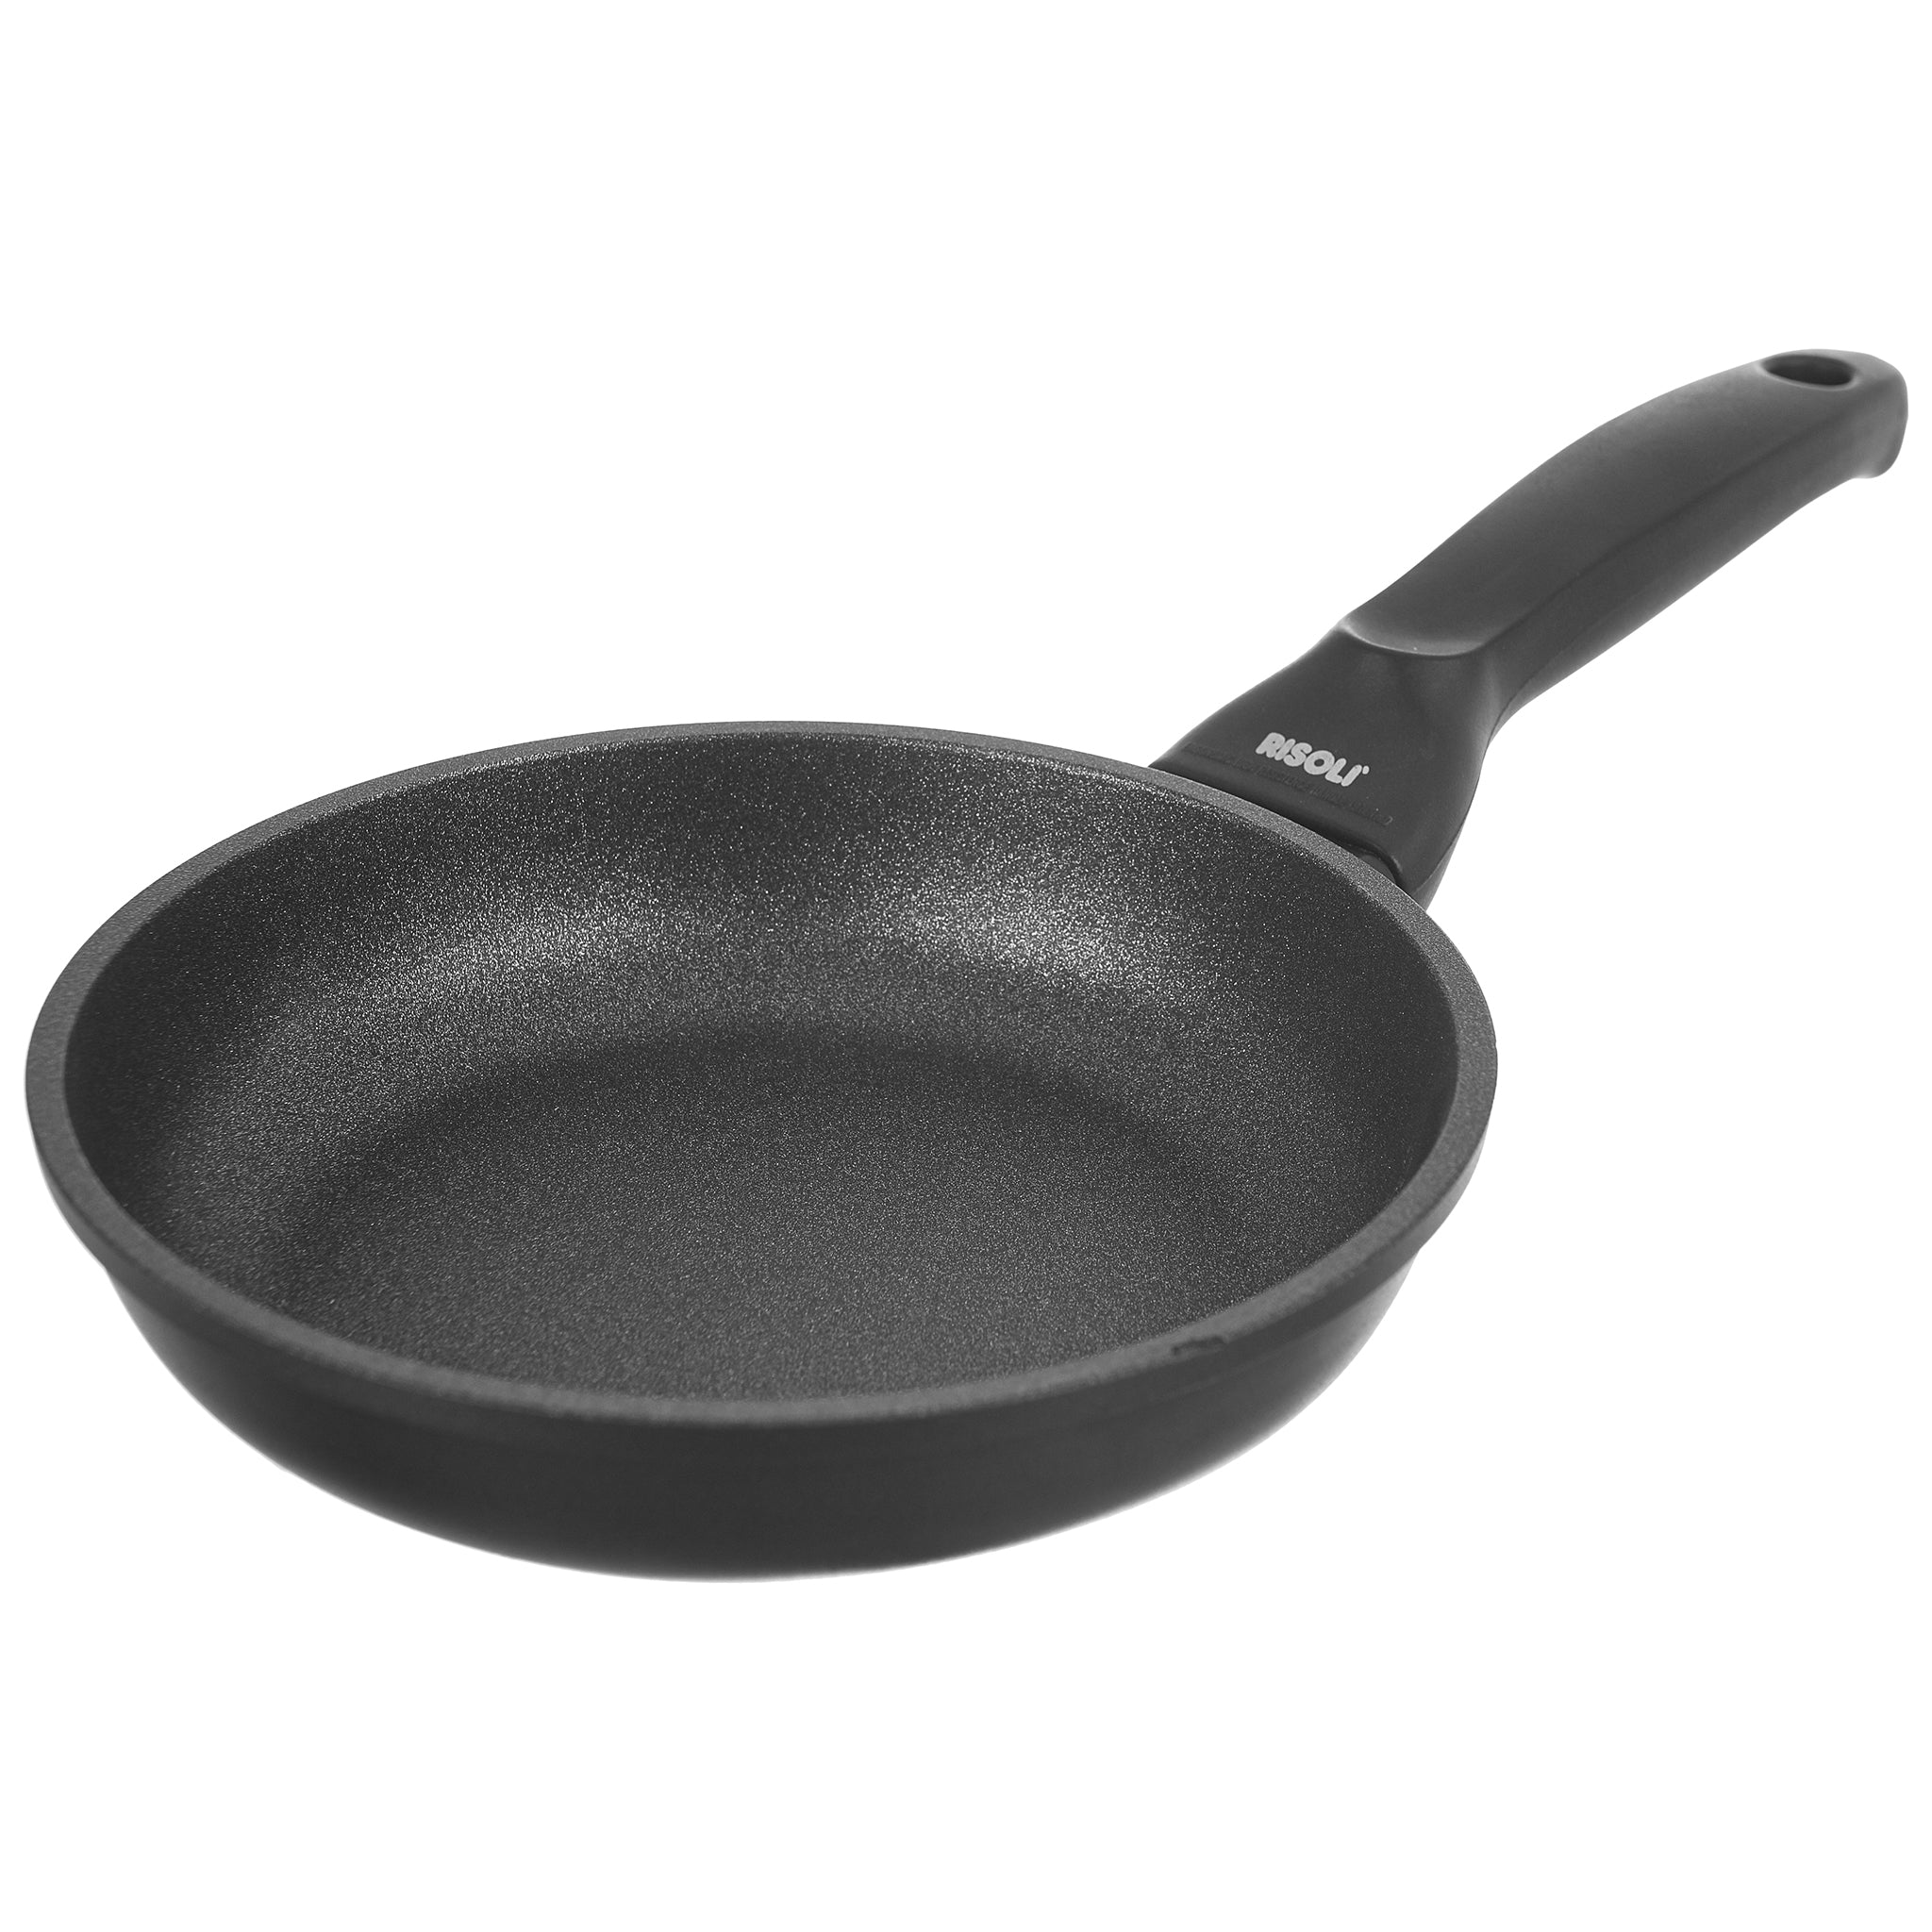 Risoli - Black Plus Fry Pan with Black Handle - 20 cm - Black - 44000383